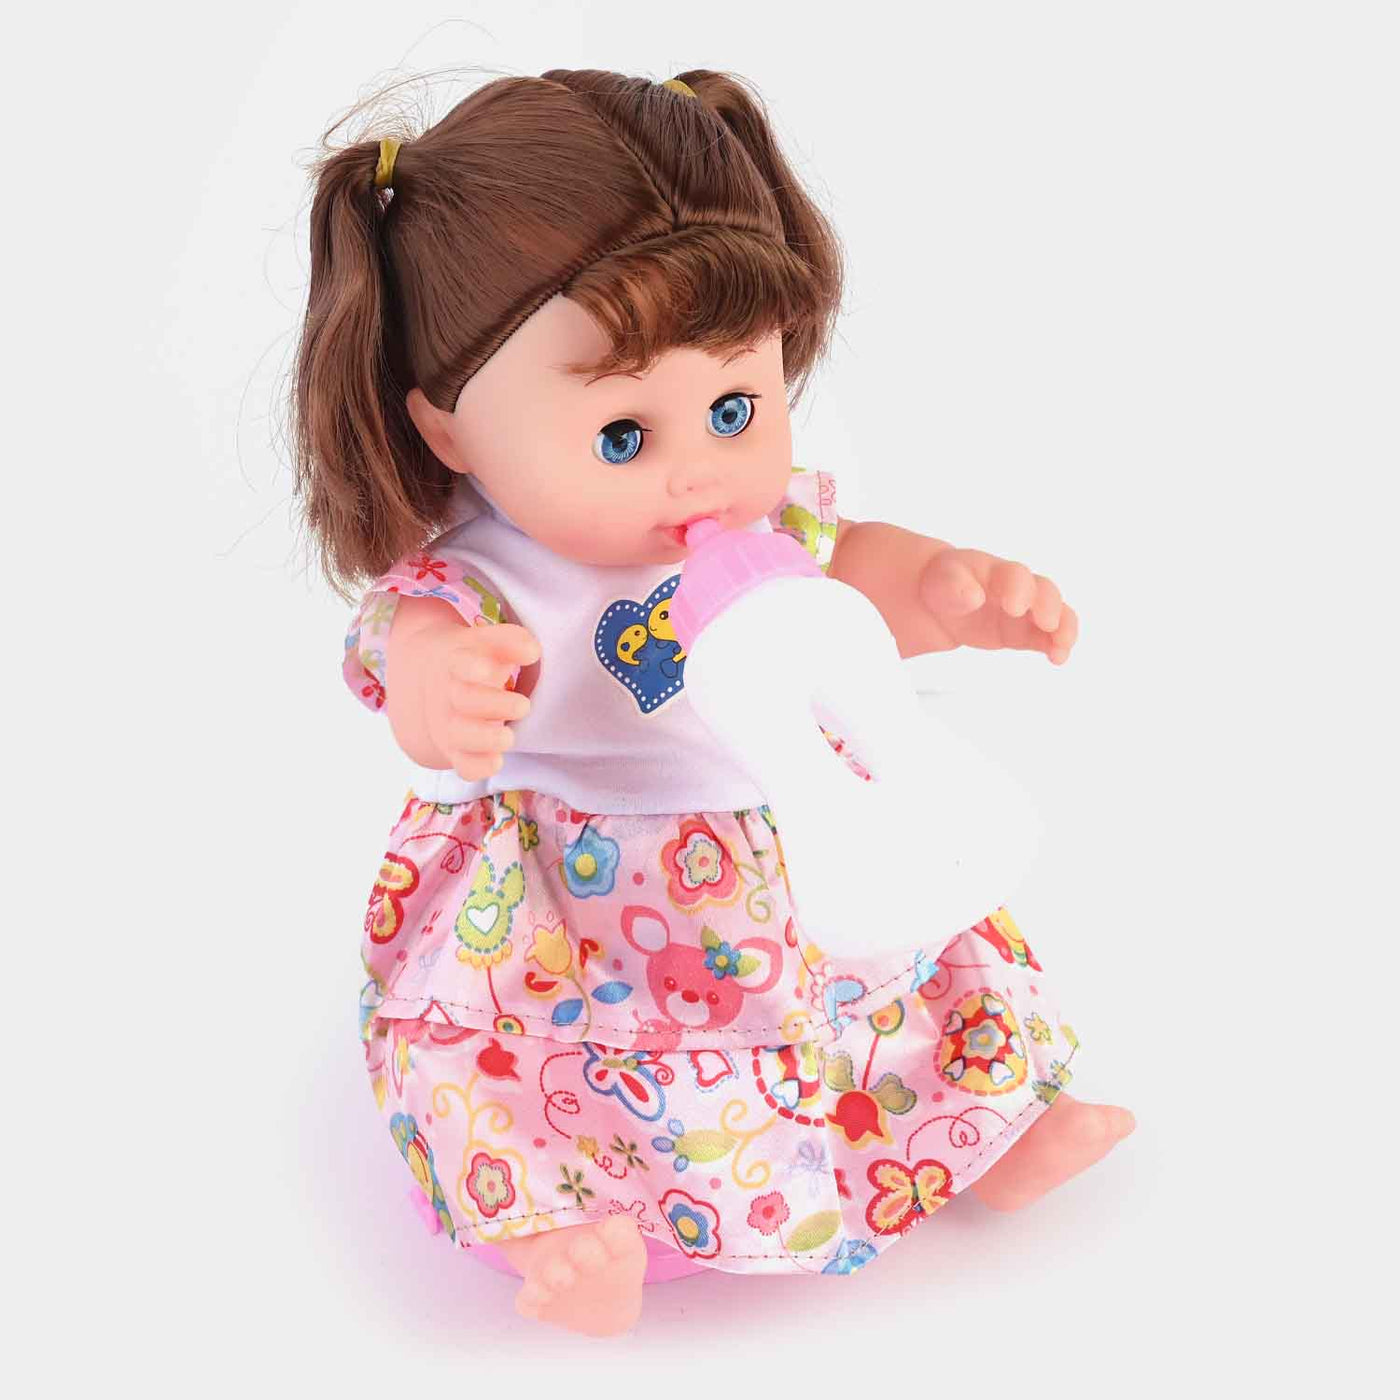 Cute Baby Doll Play Set